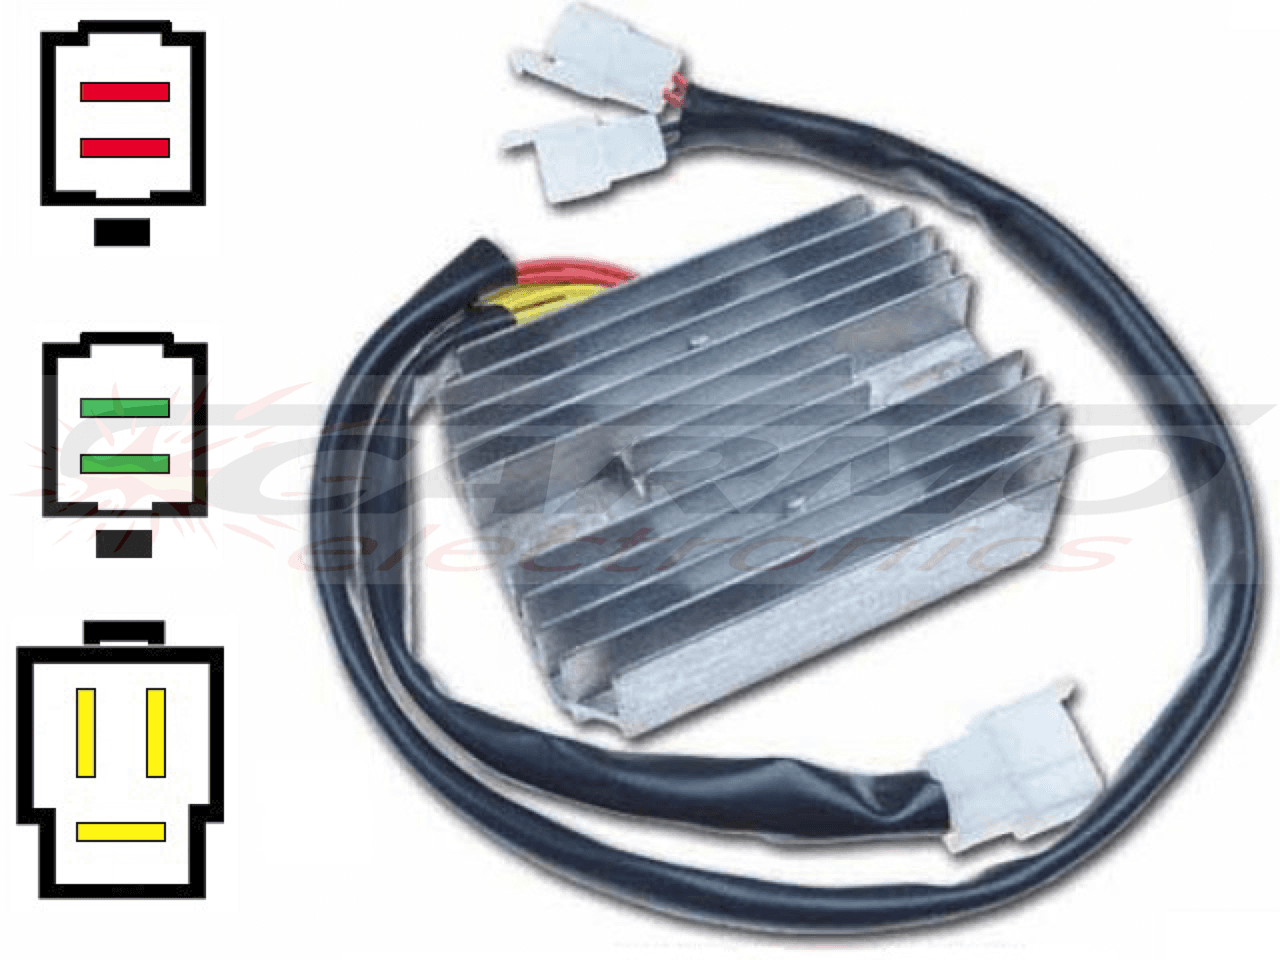 CARR121LI - Honda VT MOSFET Voltage regulator rectifier (SH541A-12, SH541G-11, SH541KC, Shindengen) - Clique na Imagem para Fechar